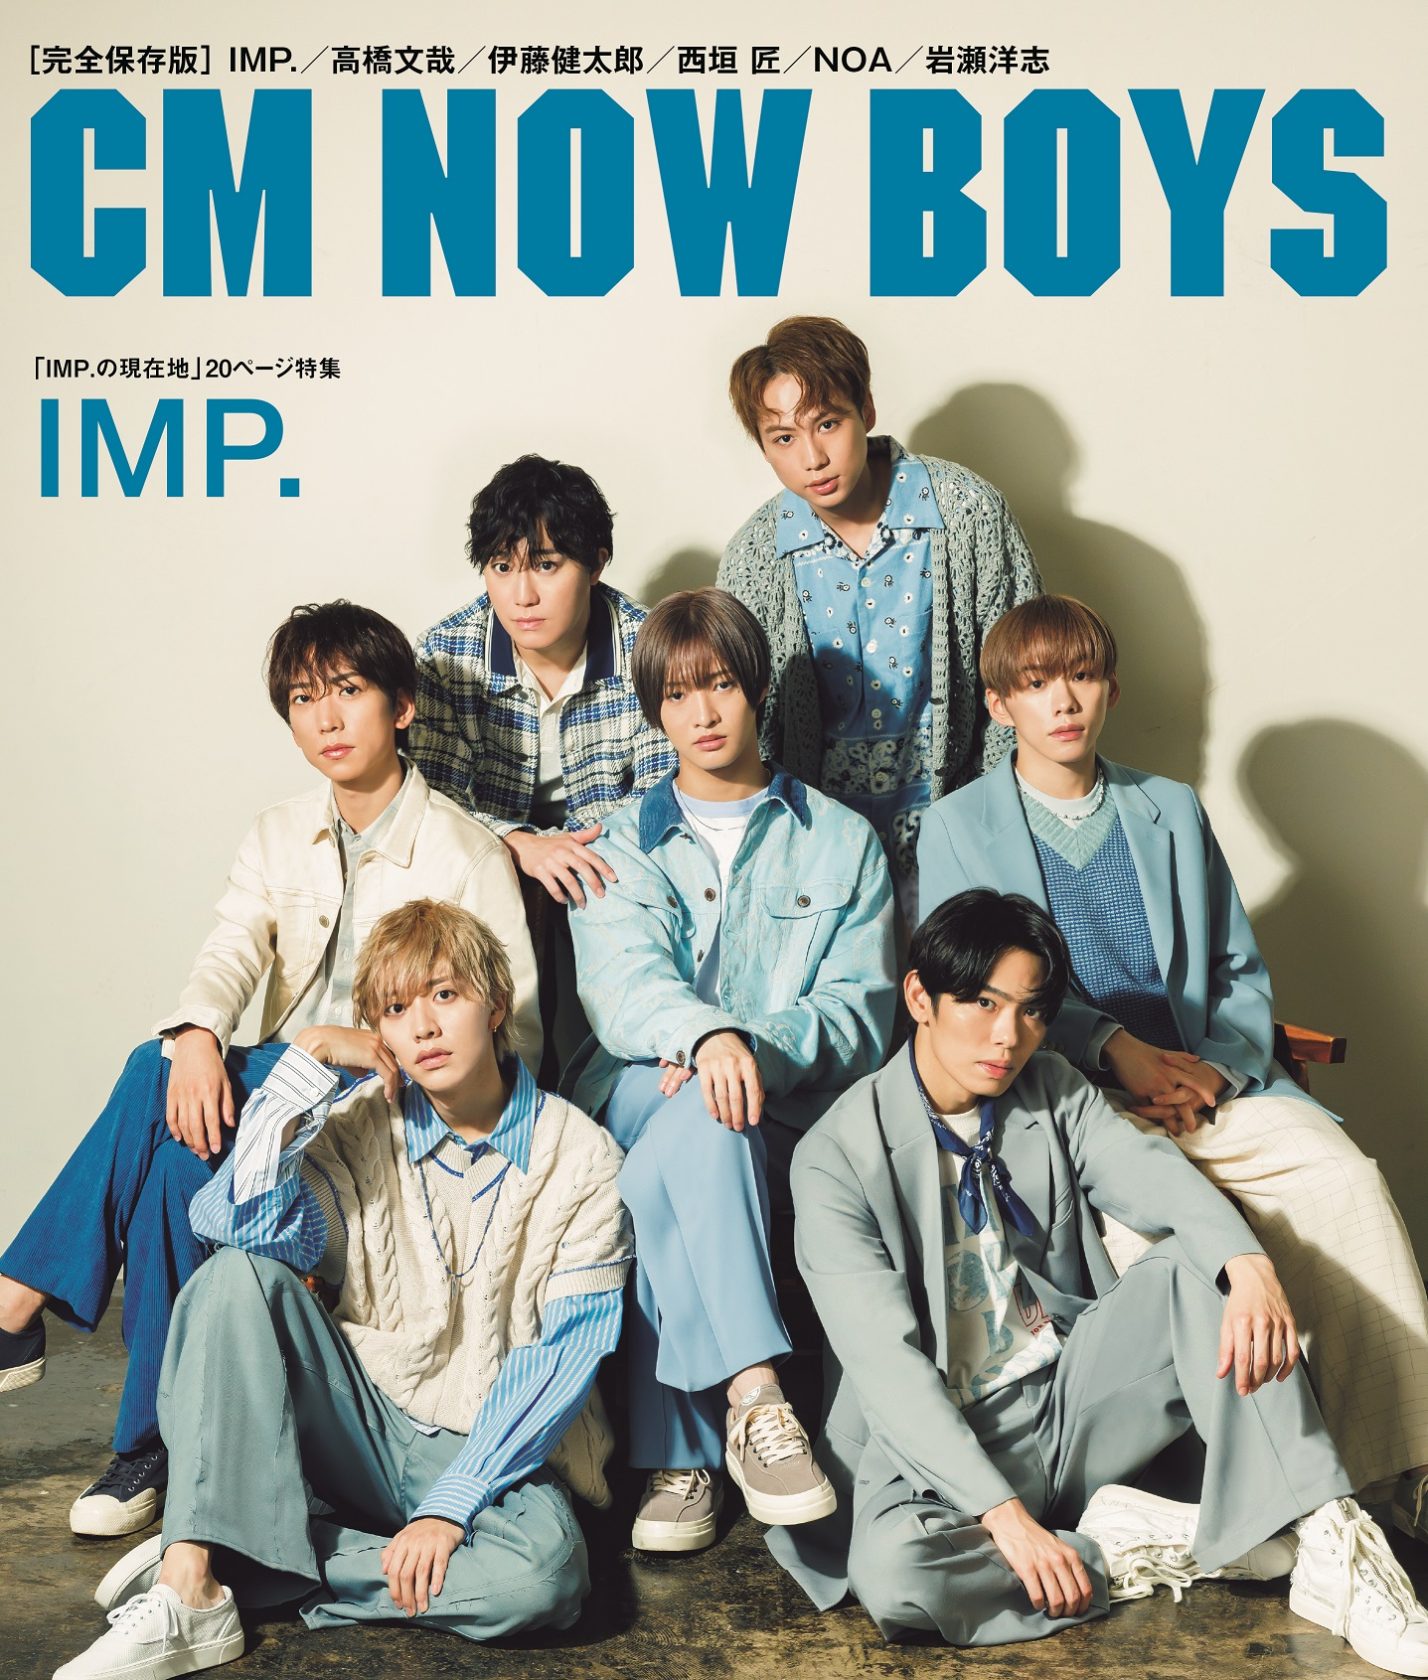 IMP.が「CM NOW BOYS」の裏表紙に登場!来年1月24日発売号、個別質問や座談会の模様も収録